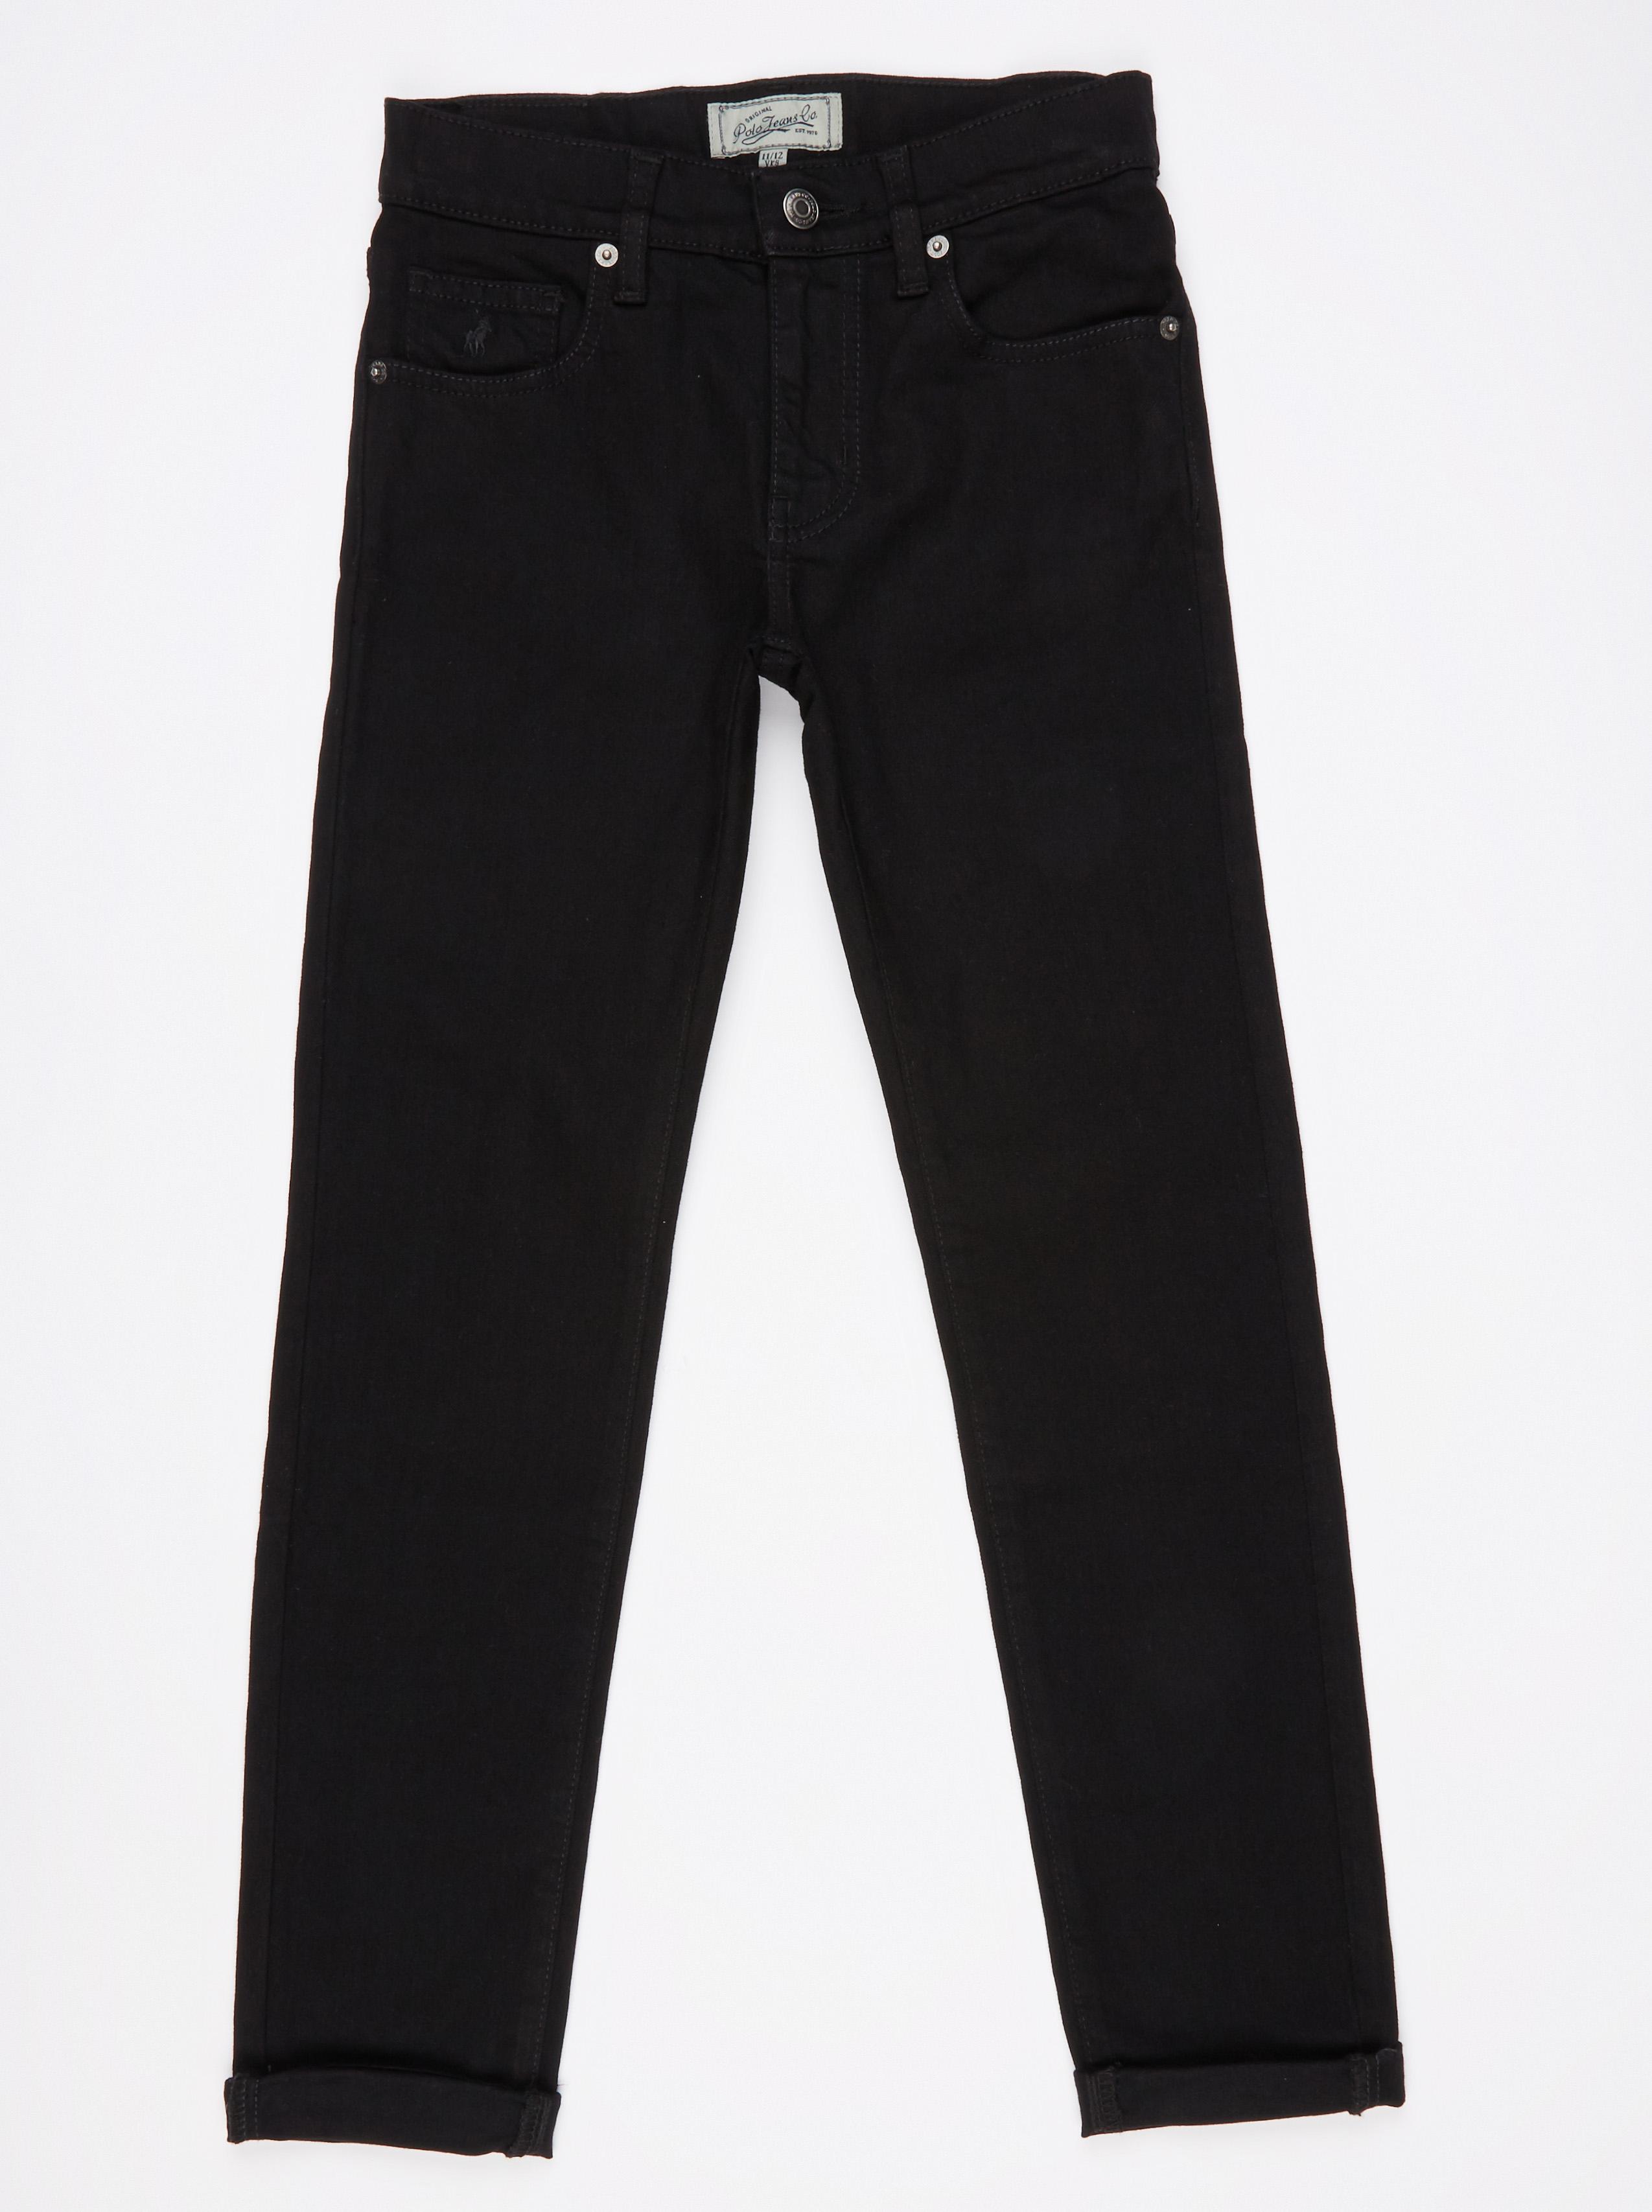 Skinny Jeans Black POLO Pants & Jeans | Superbalist.com